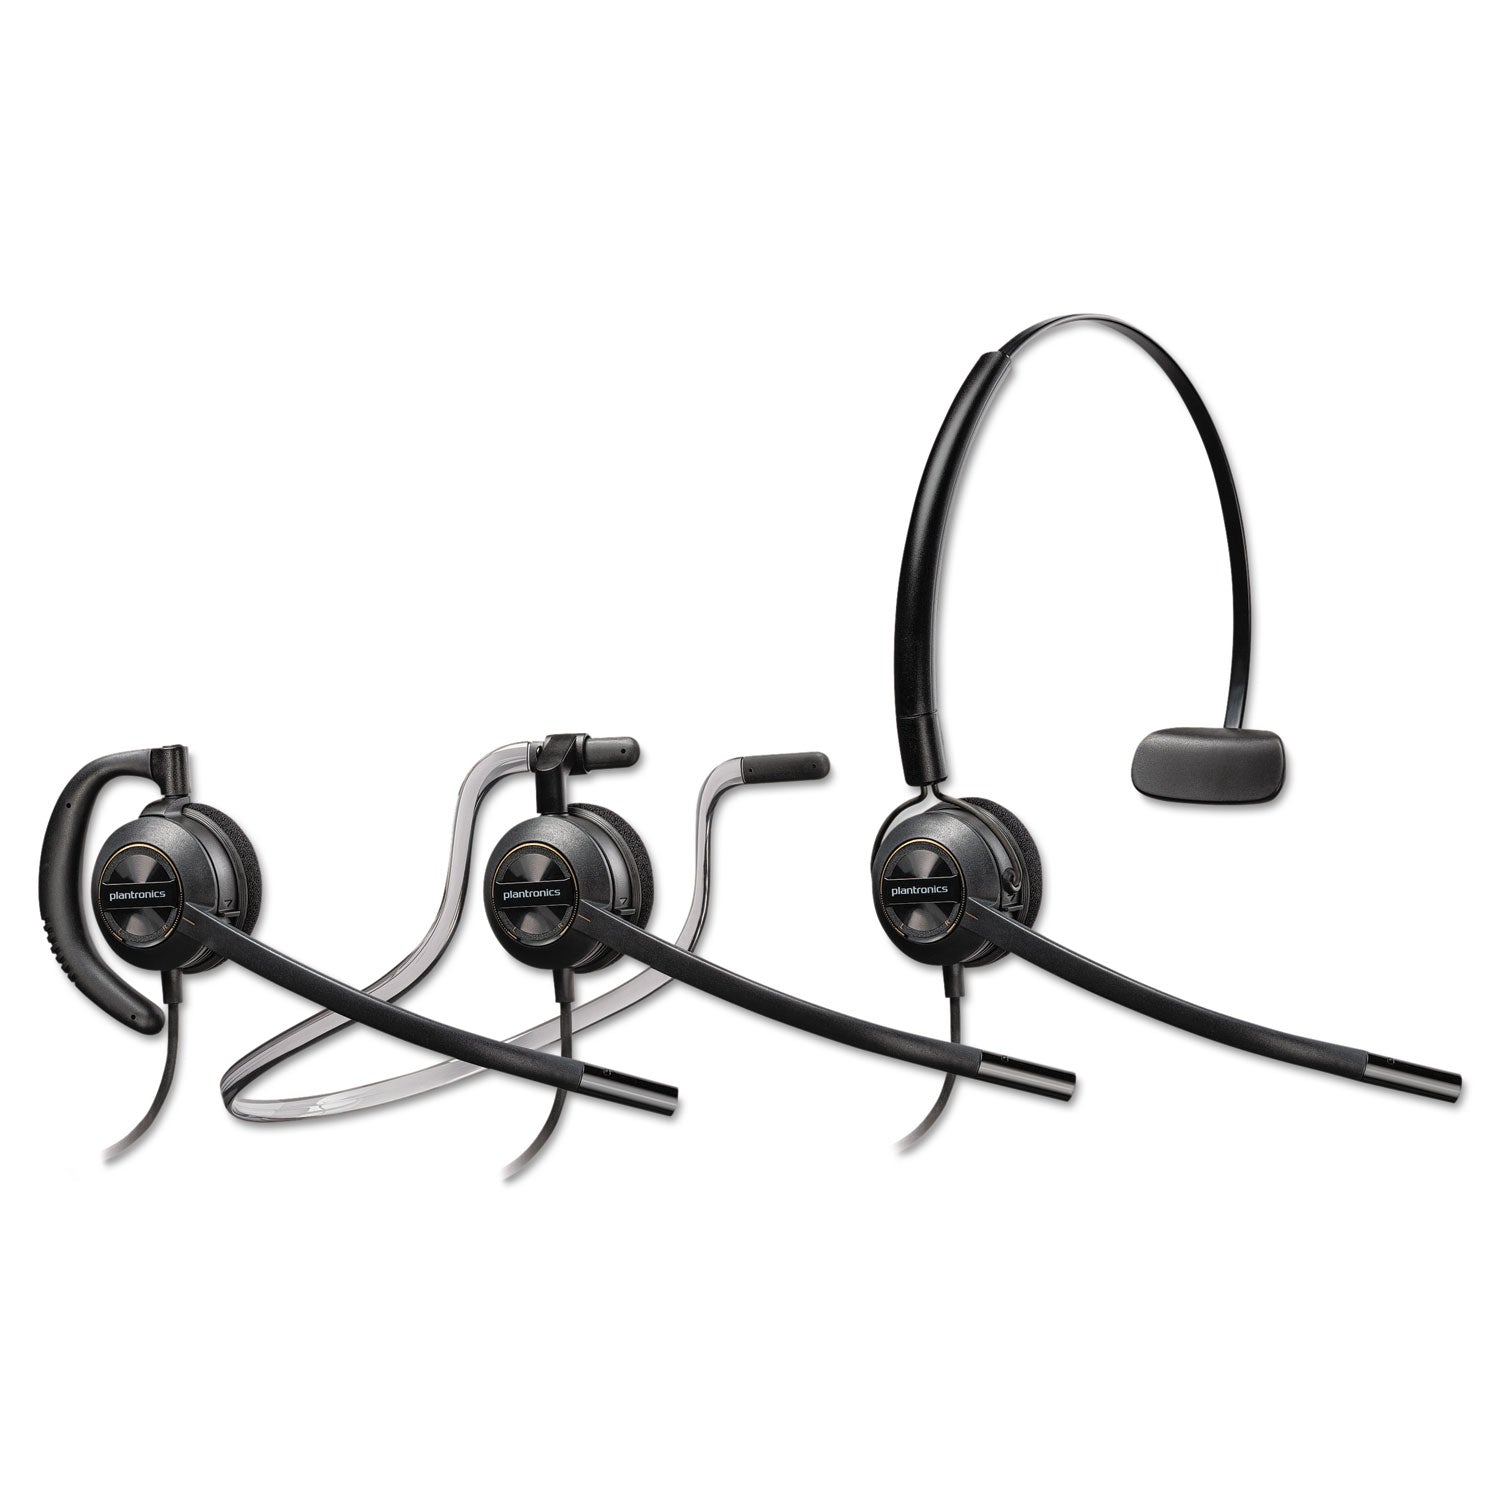 EncorePro 540 Monaural Convertible Headset, Black - 